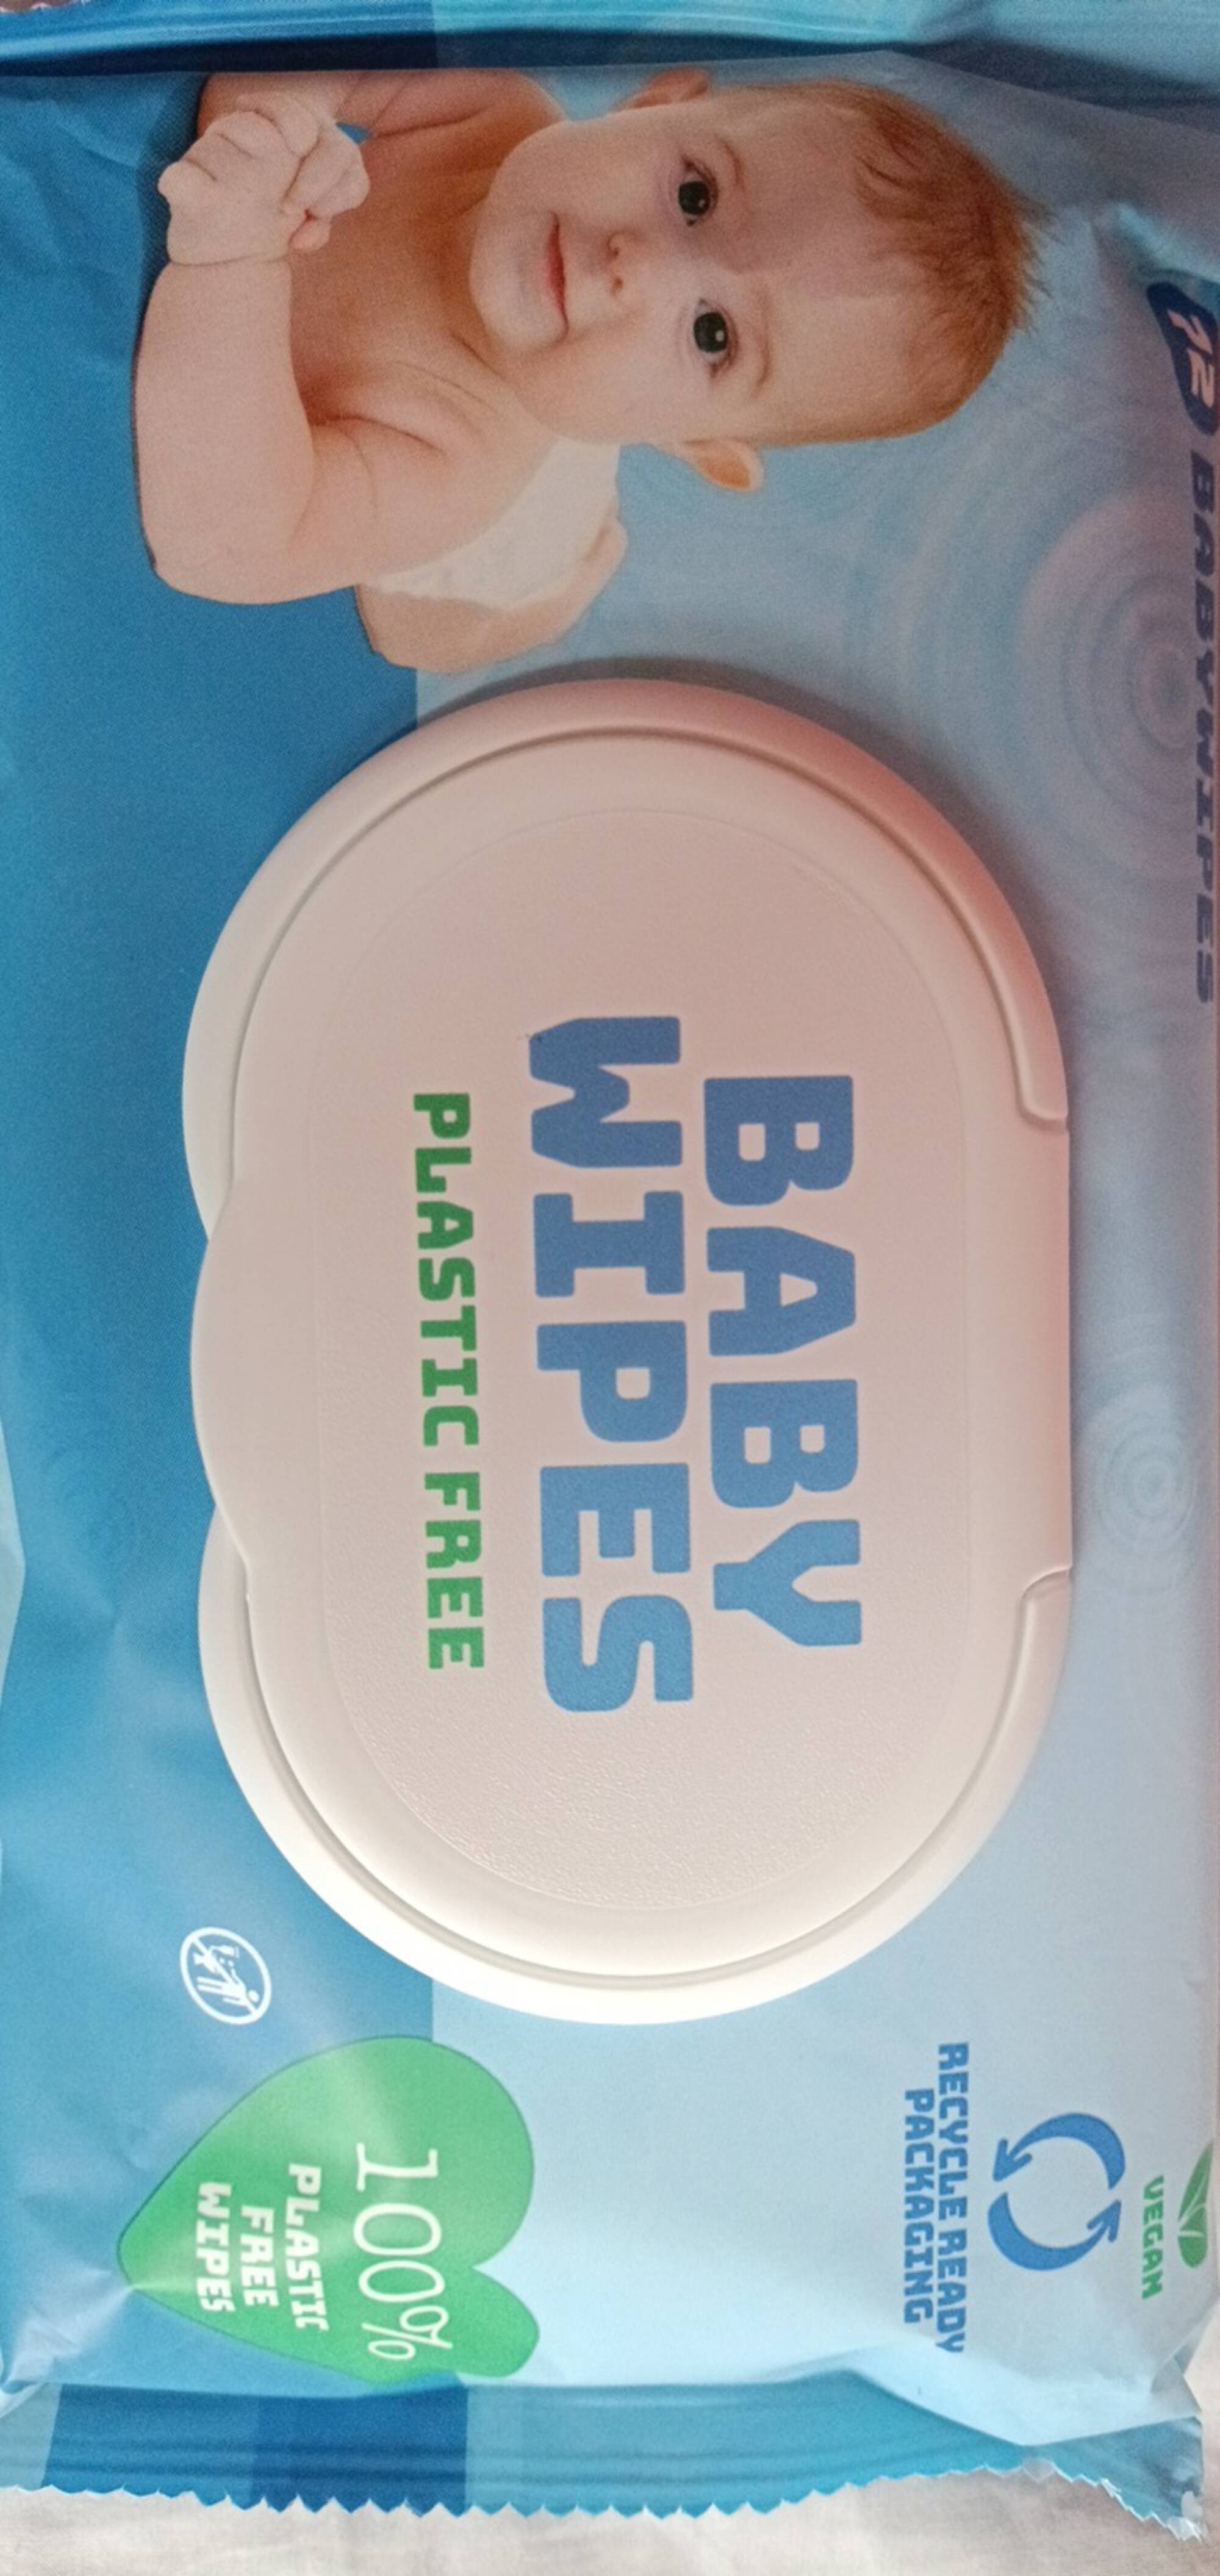 CODIGROUP - Baby wipes plastic free